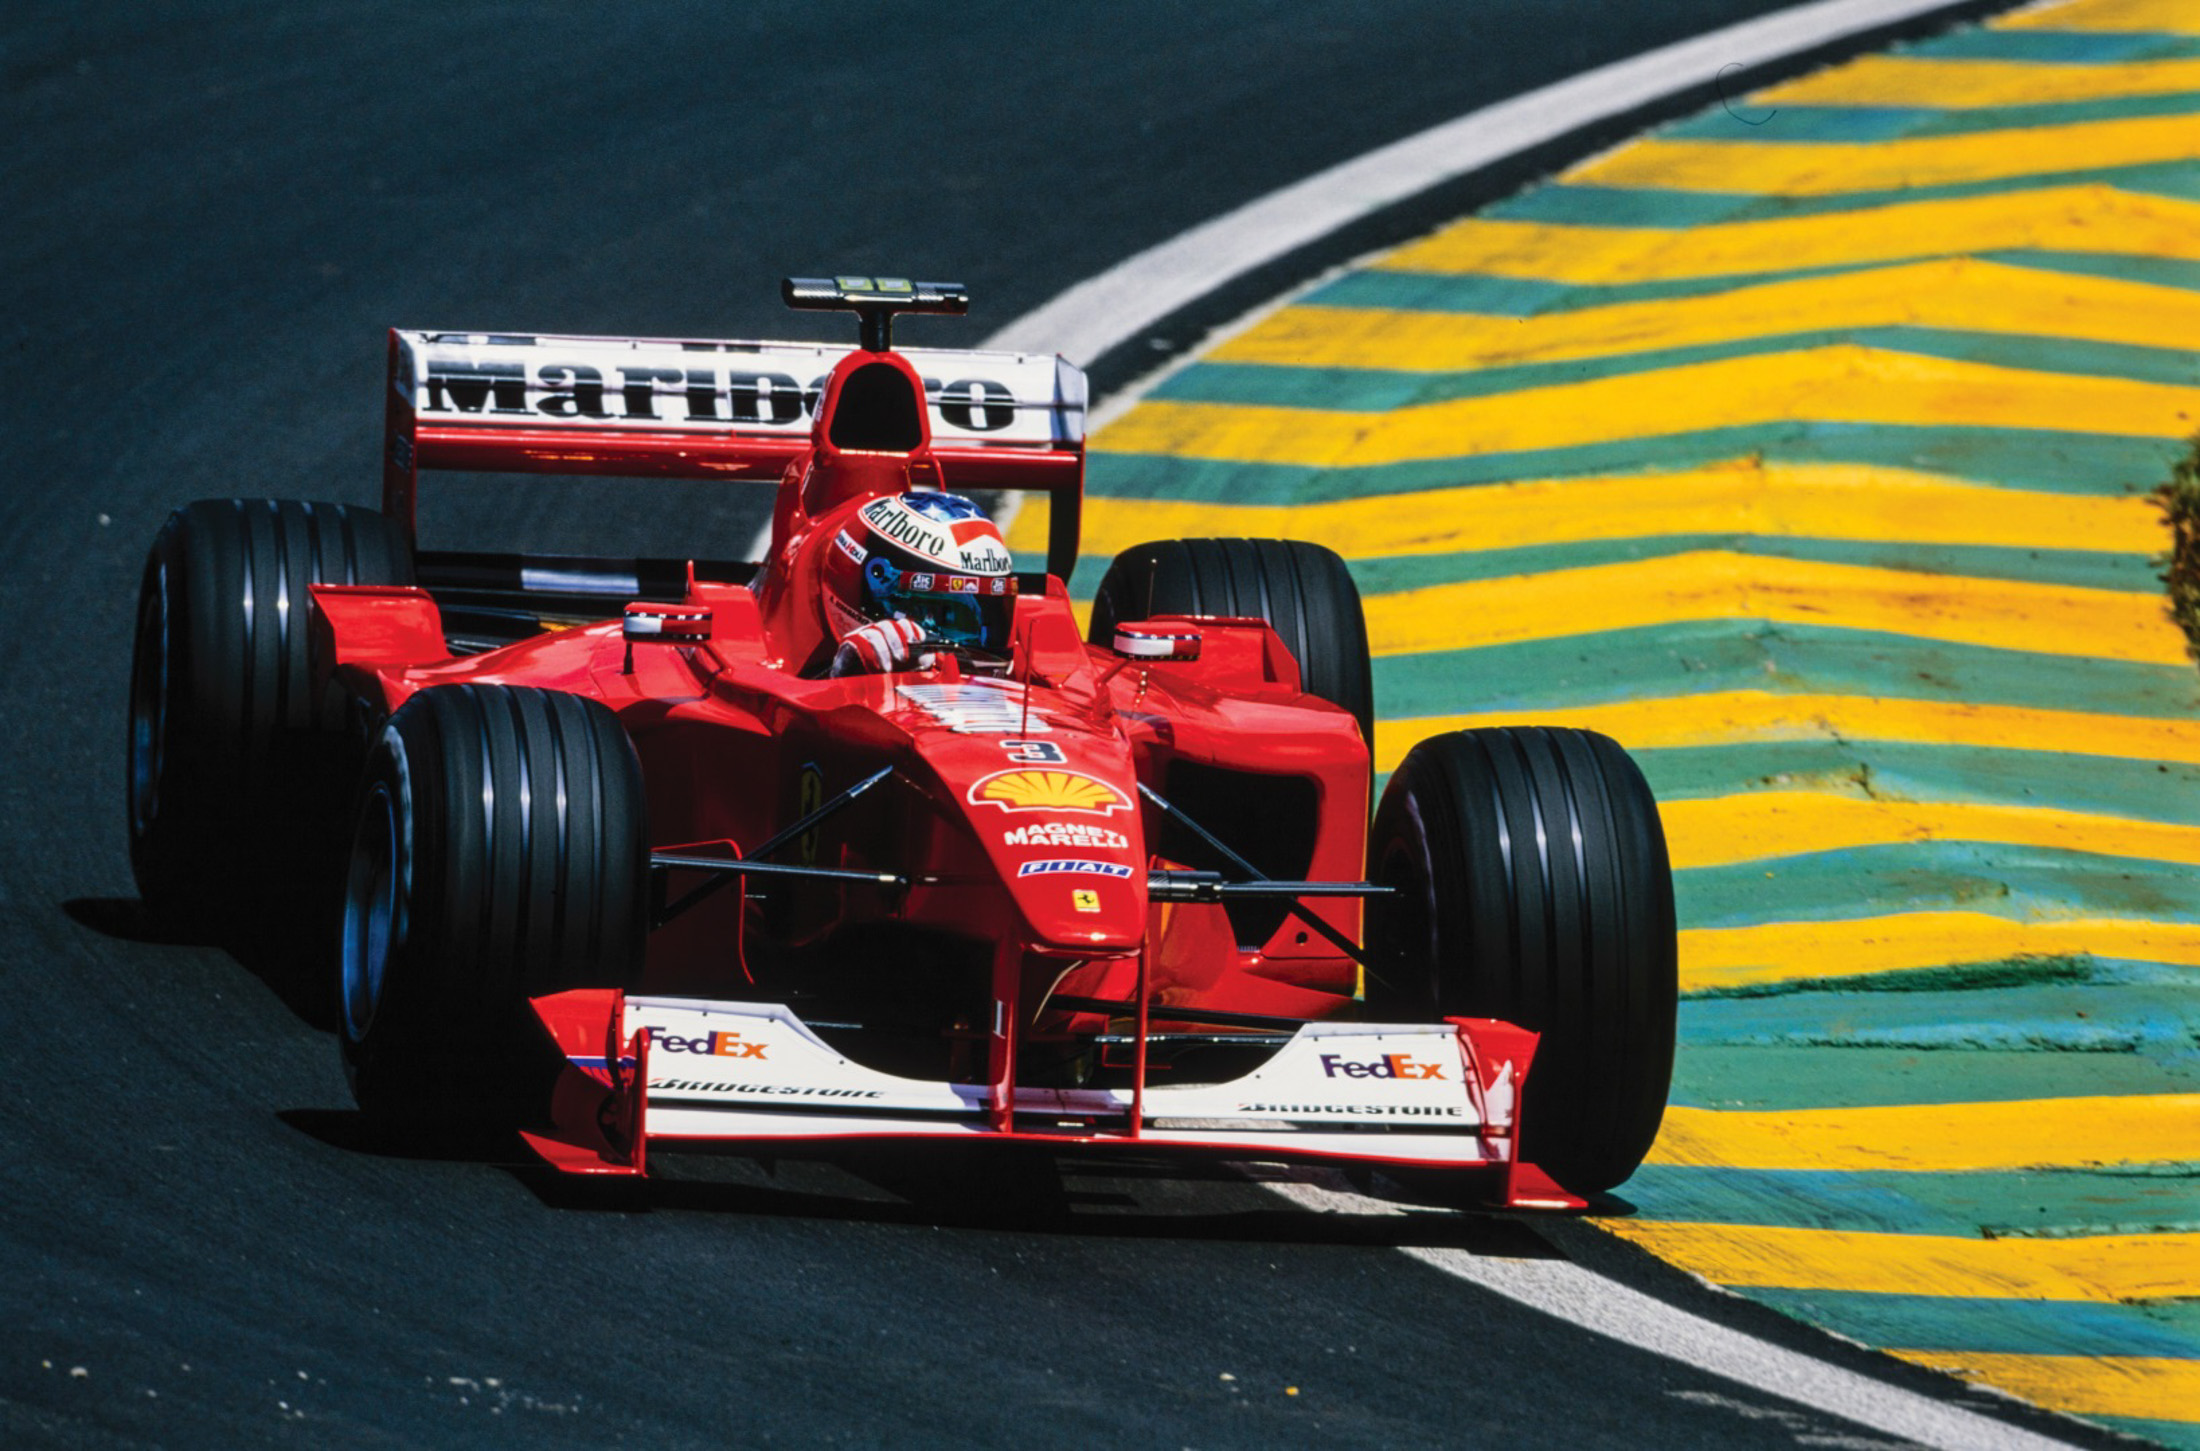 Michael Schumacher's $9.5 Million F1 Ferrari Is Tip of Valuable Race Car  Market - Bloomberg